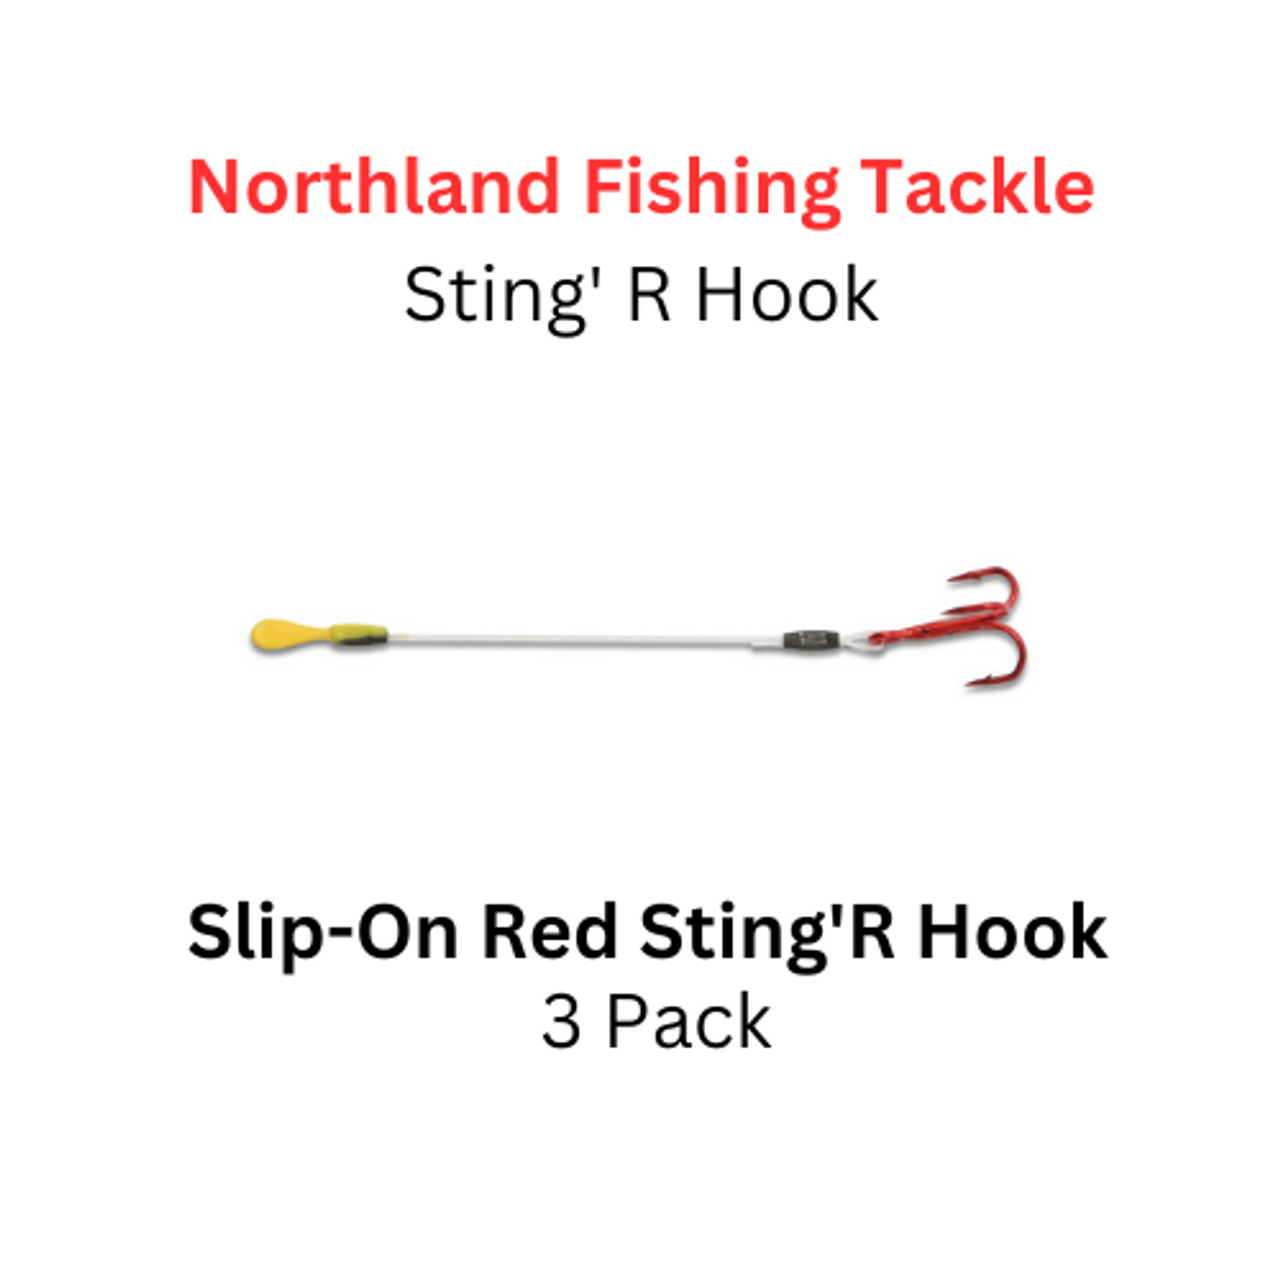 https://cdn11.bigcommerce.com/s-u9nbd/images/stencil/1280x1280/products/6373/16051/Northland_Fishing_Tackle_stingR_hook_Slip-on_red_hook__91670.1677783074.png?c=2